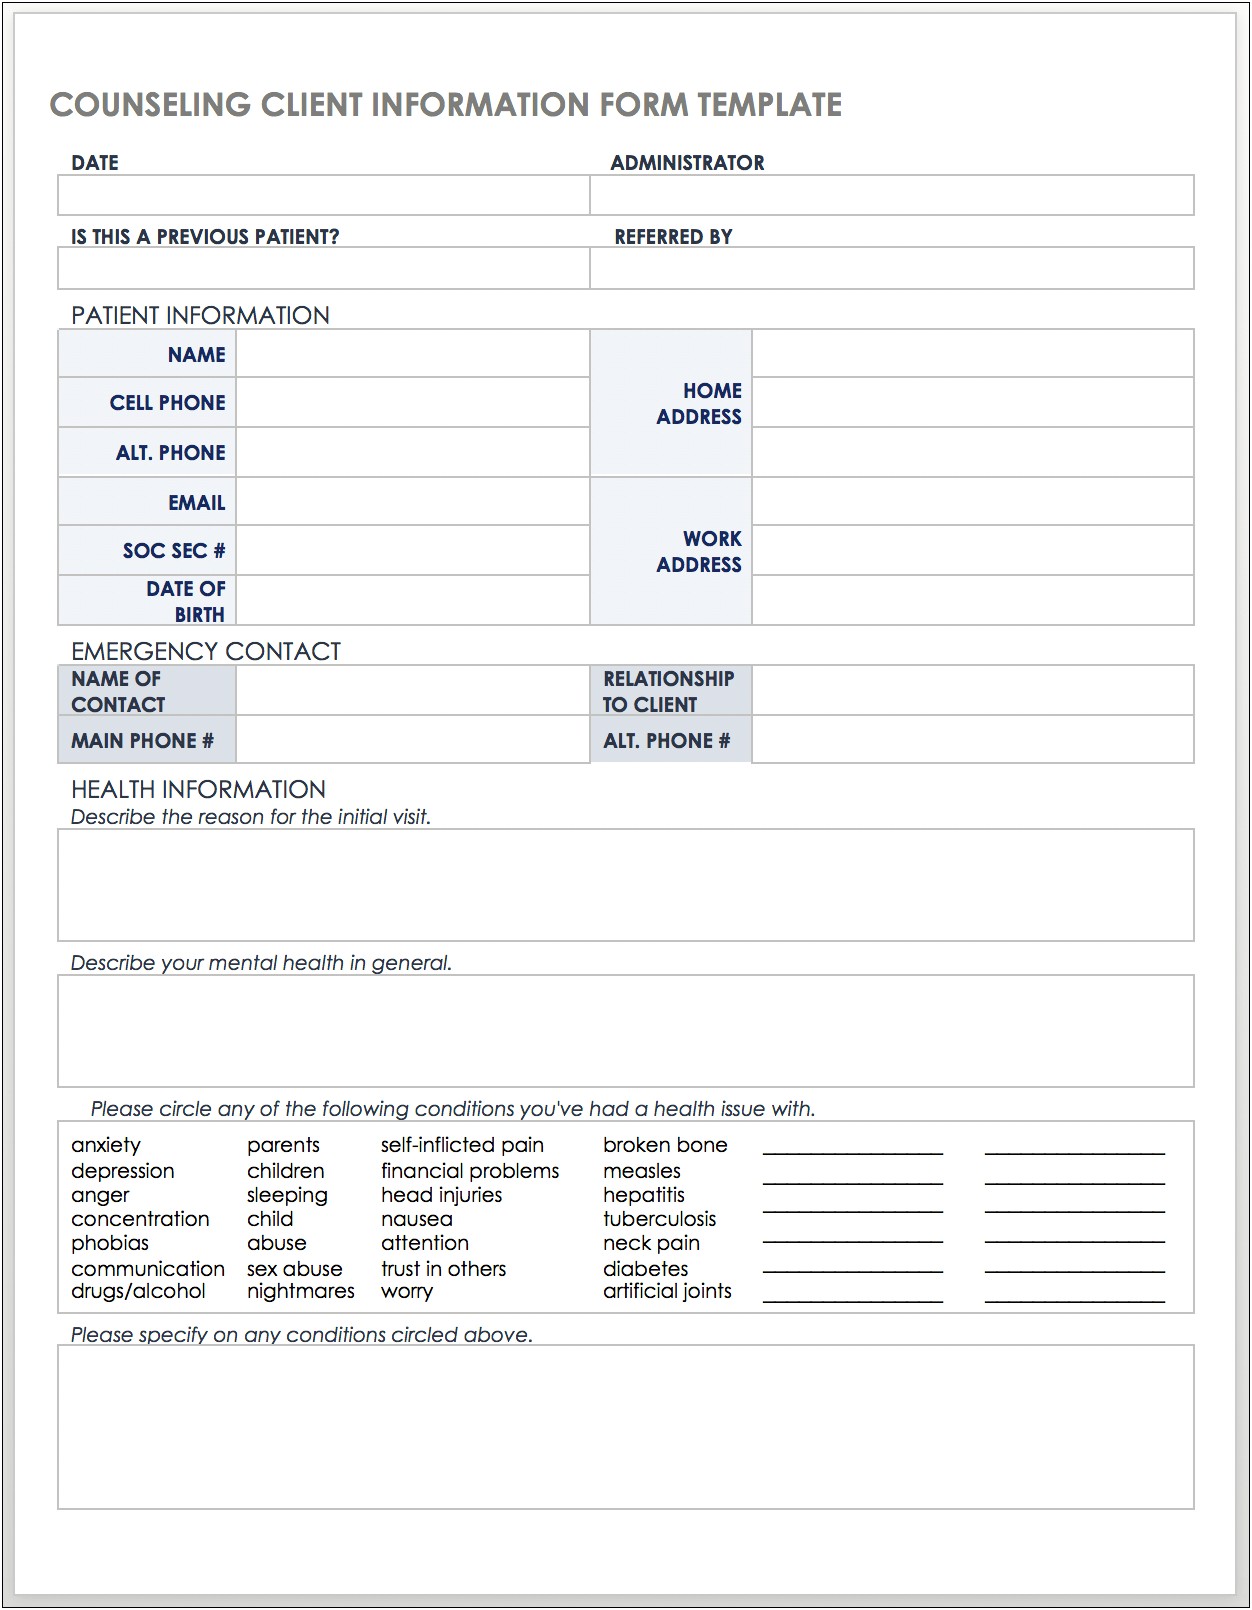 babysitter-information-sheet-template-free-printable-templates-resume-designs-851nb6b1aq